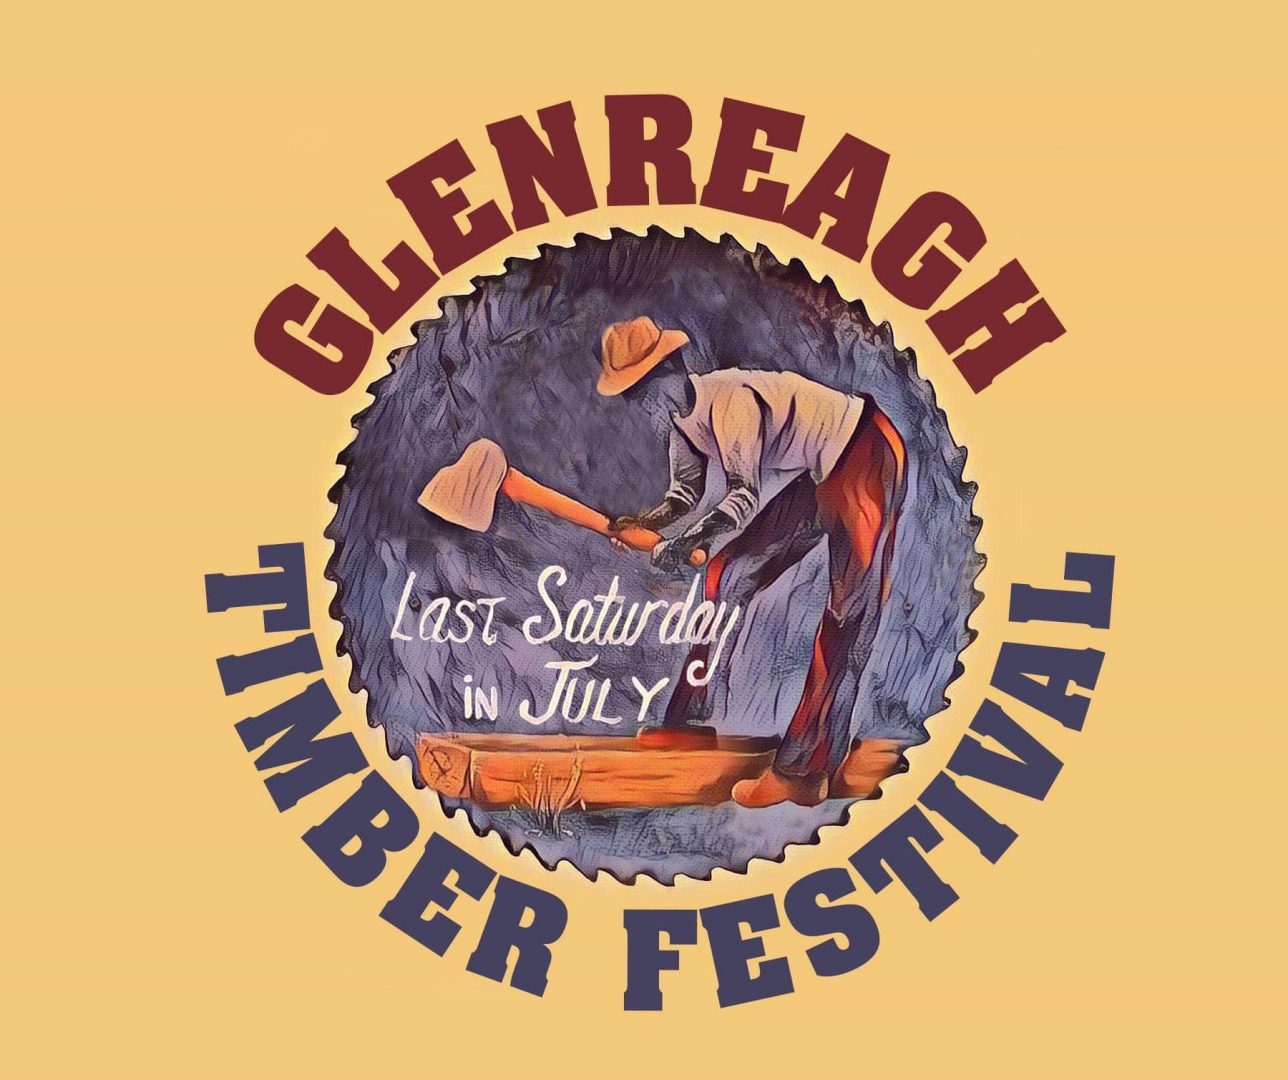 16th Glenreagh Timber Festival 2020